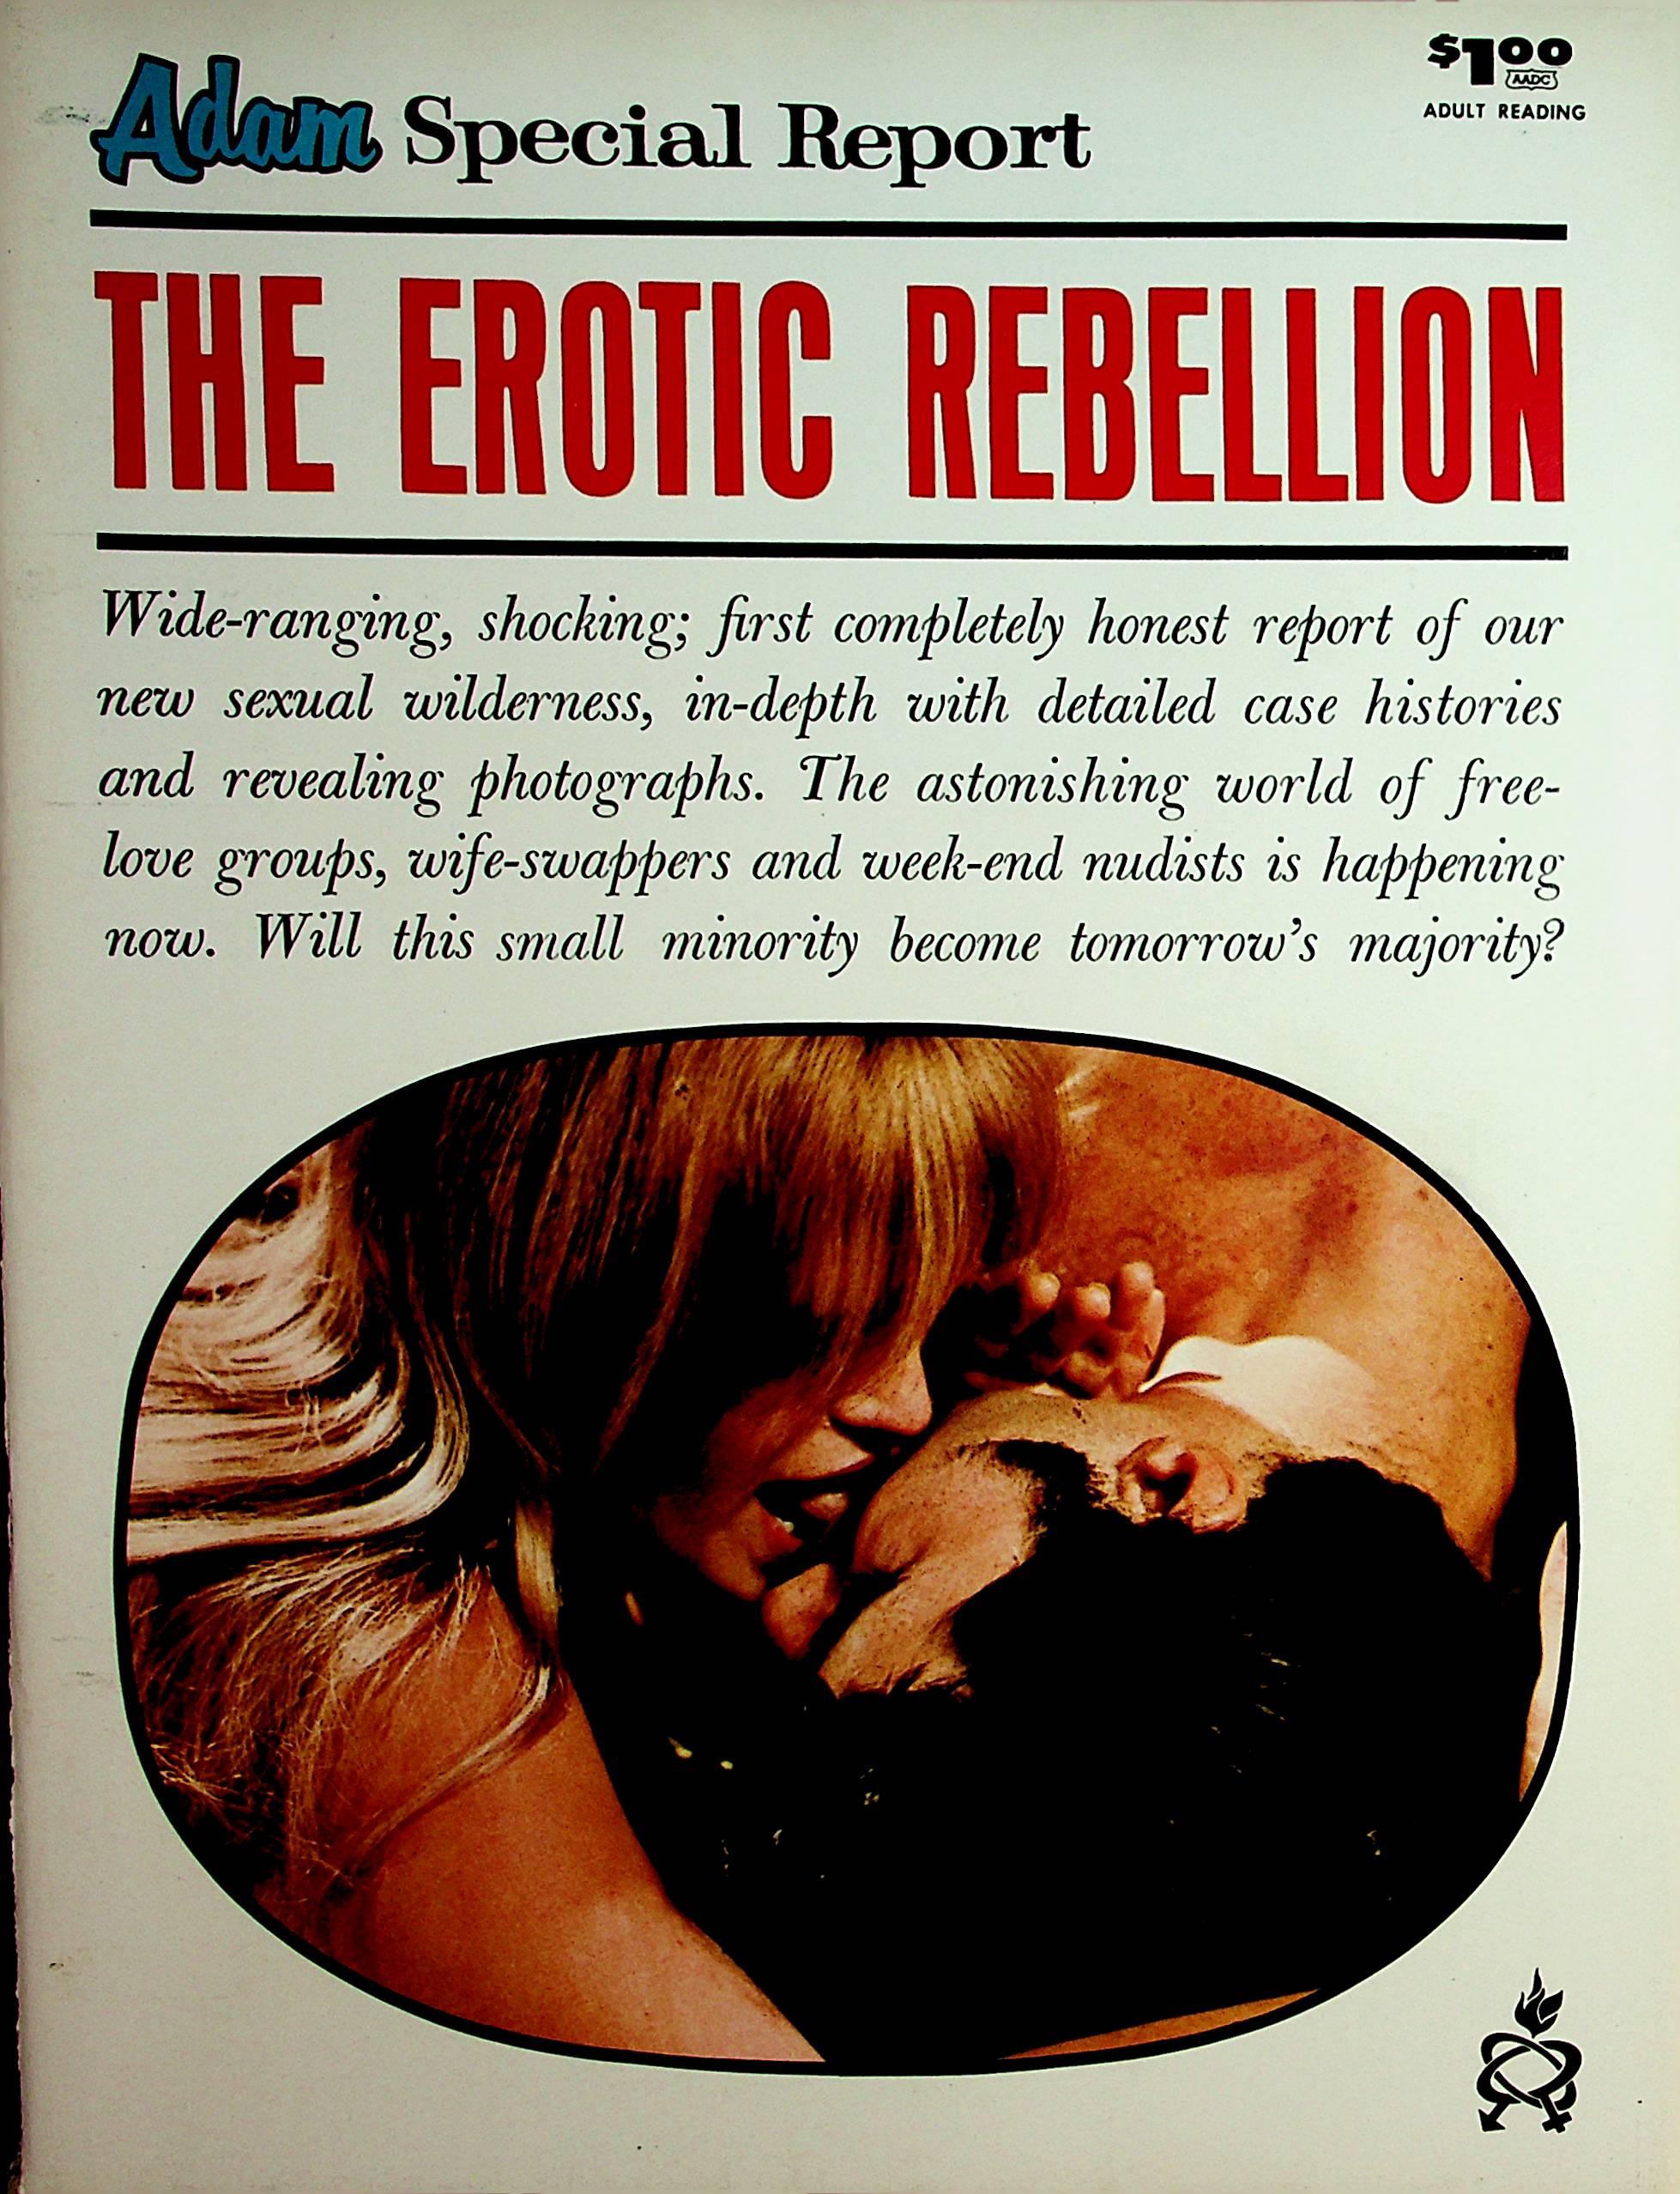 Adam Special Report Magazine The Erotic Rebellion #1 March 1969 082421